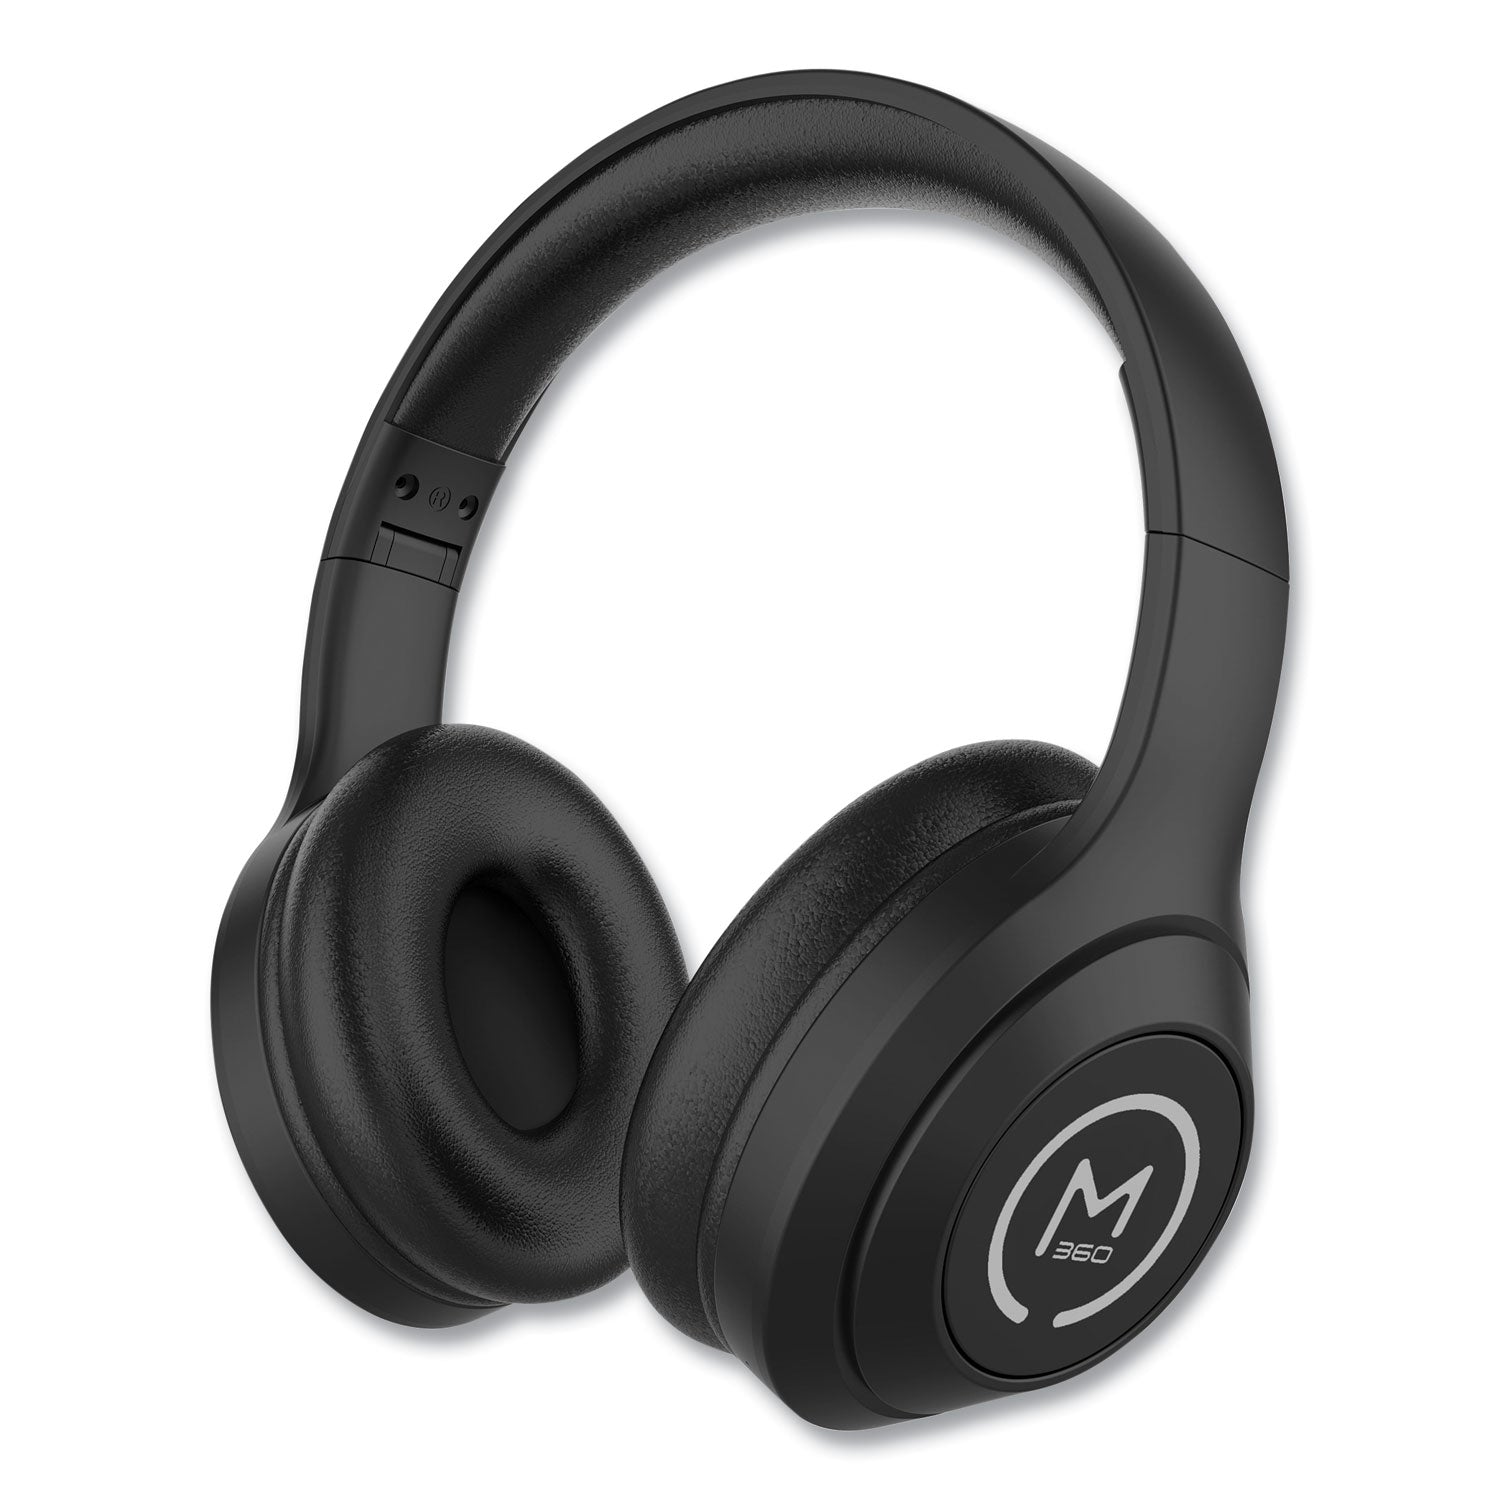 comfort+-wireless-over-ear-headphones-with-microphone-black_mhshp6500b - 1